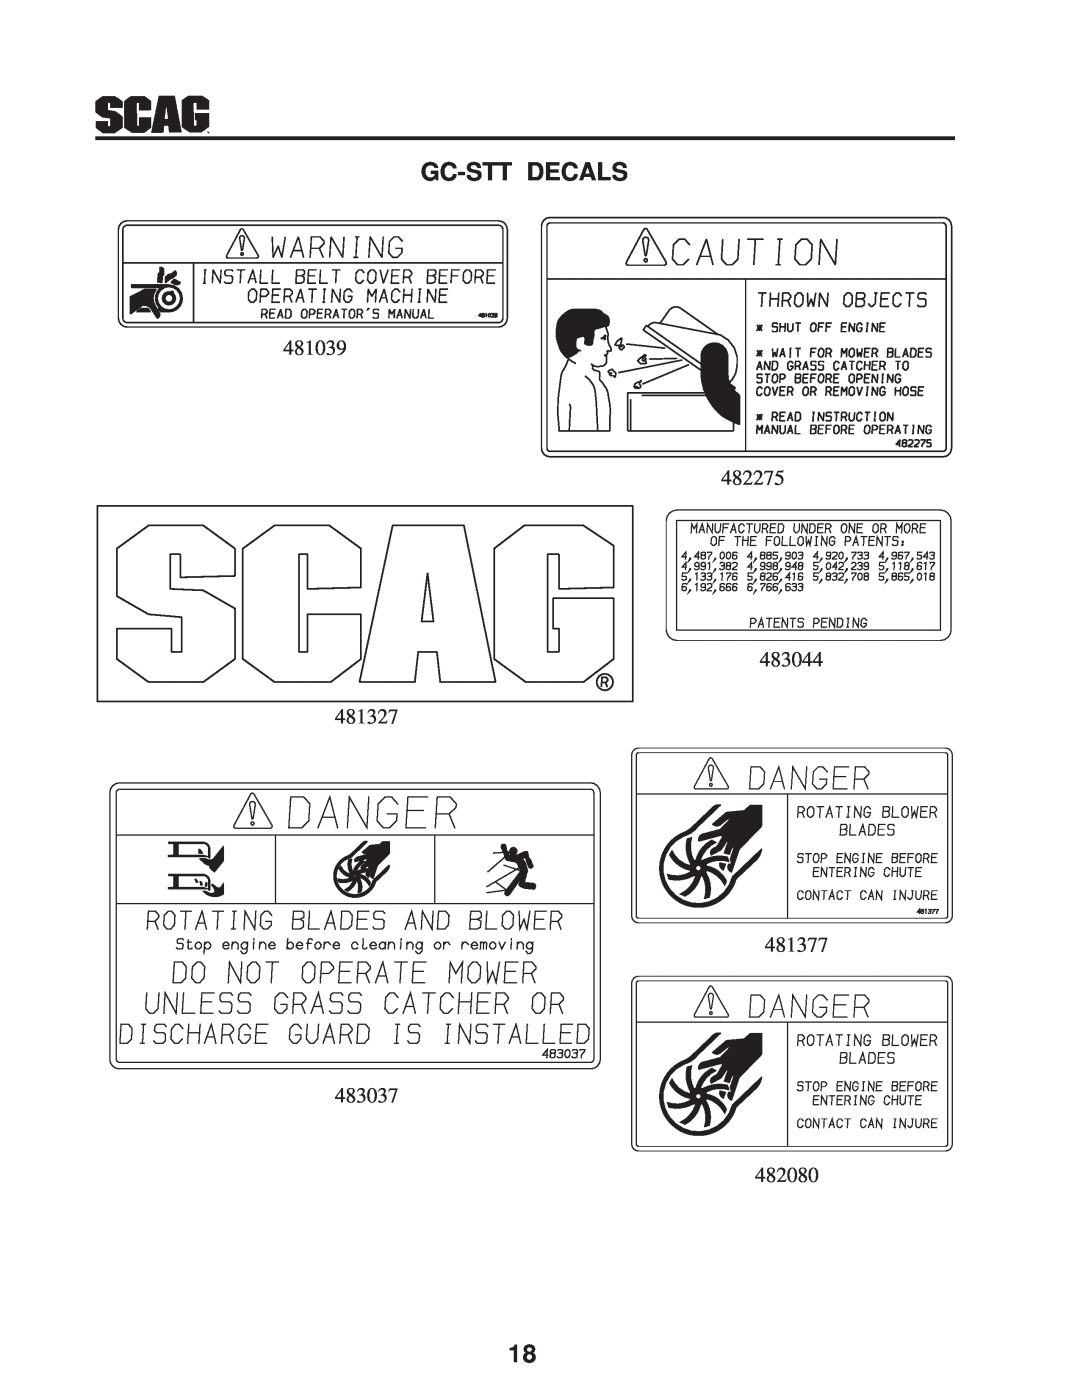 Scag Power Equipment GC-STT-V operating instructions Gc-Stt Decals, 481039 482275 483044 481327 